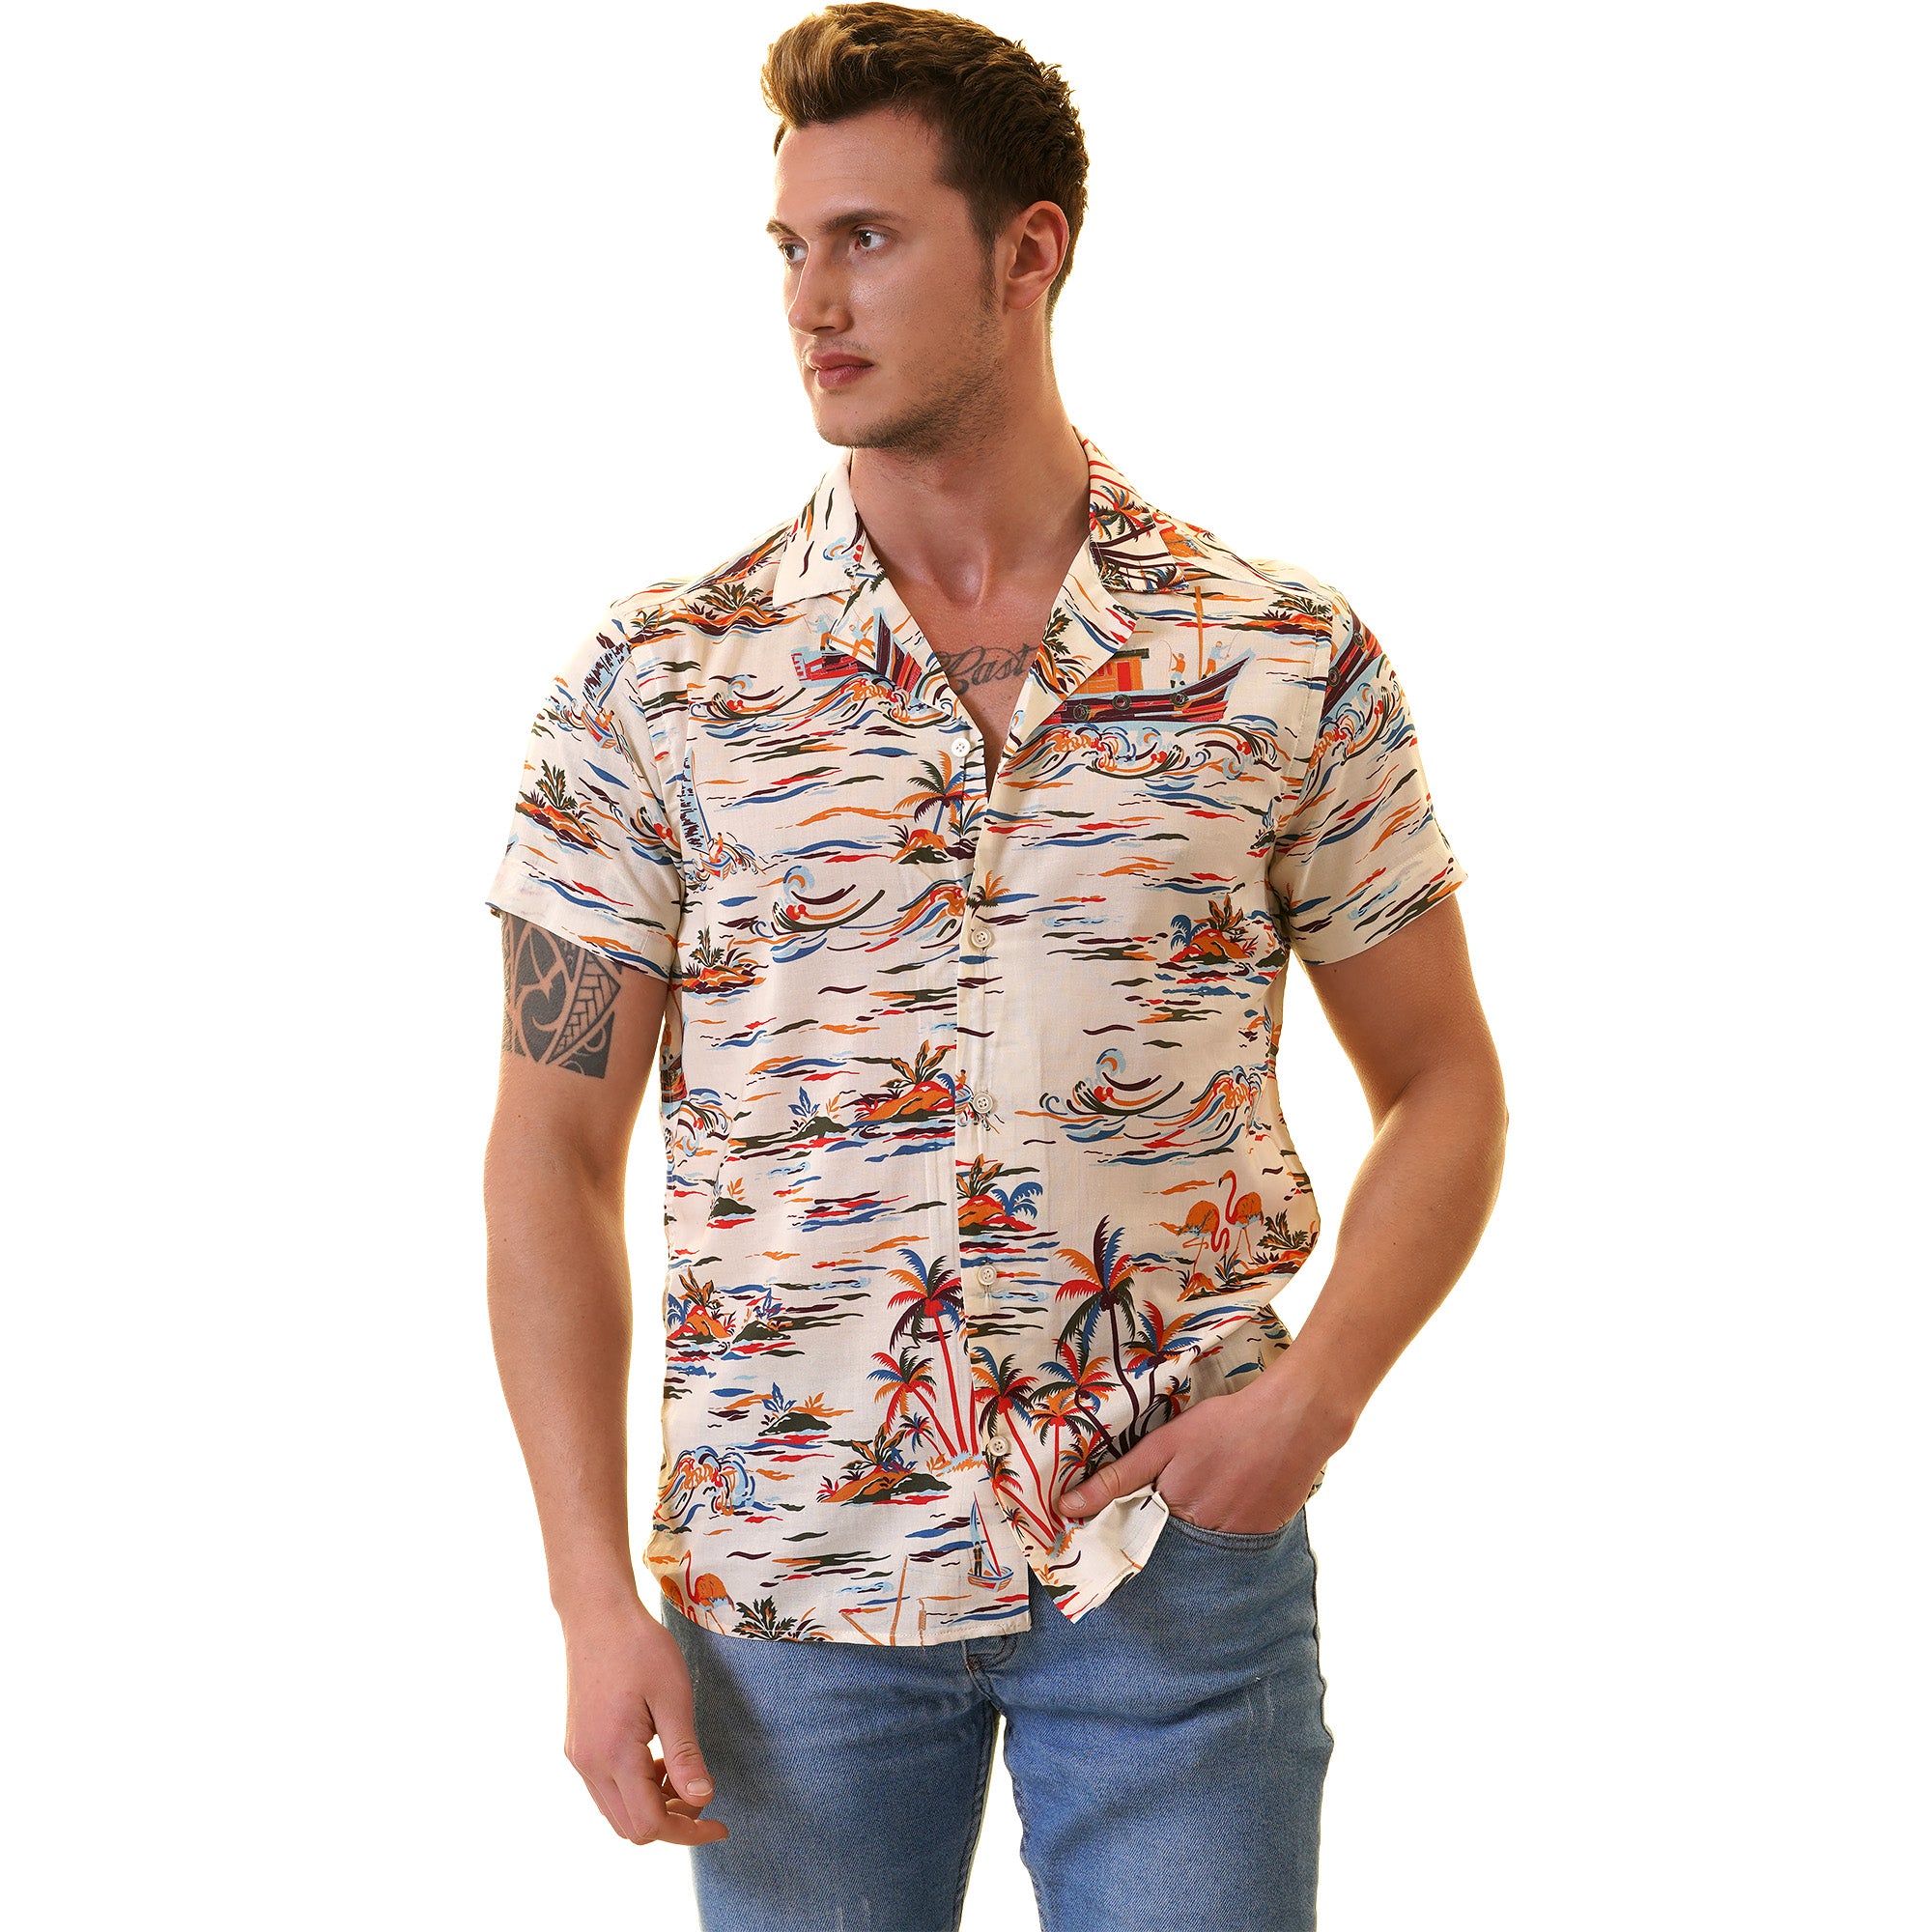 Colorful Palm Trees European Made & Designed Hawaiian Summer Shirts For Men